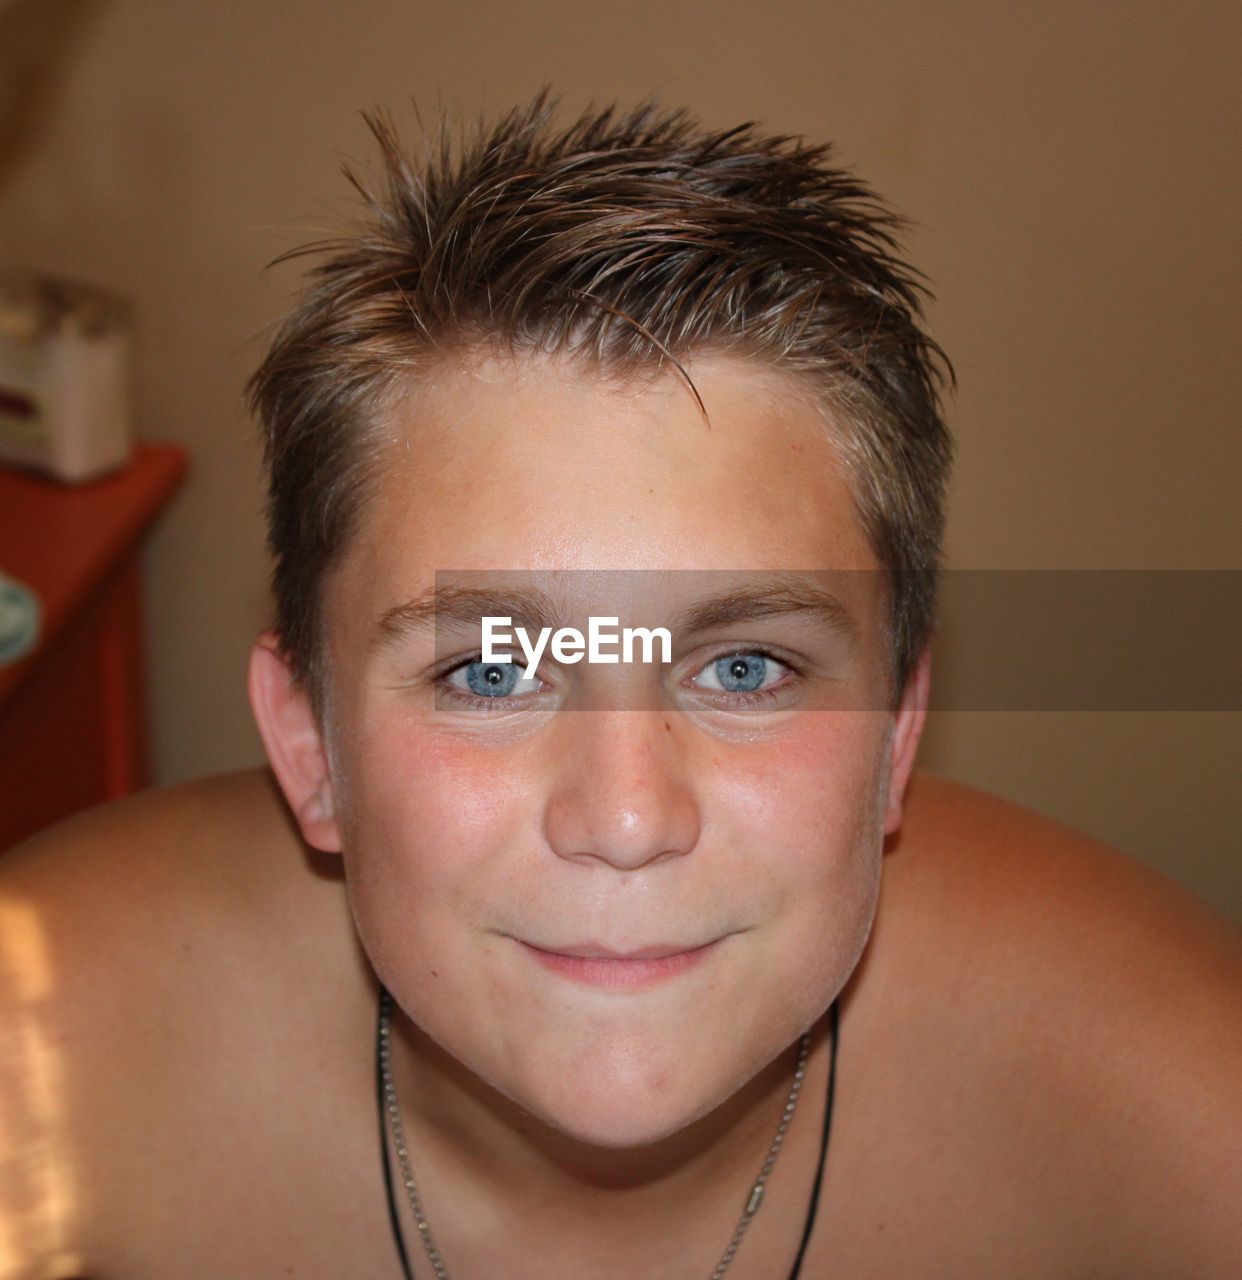 Teen male smiling. beautiful blue eyes 